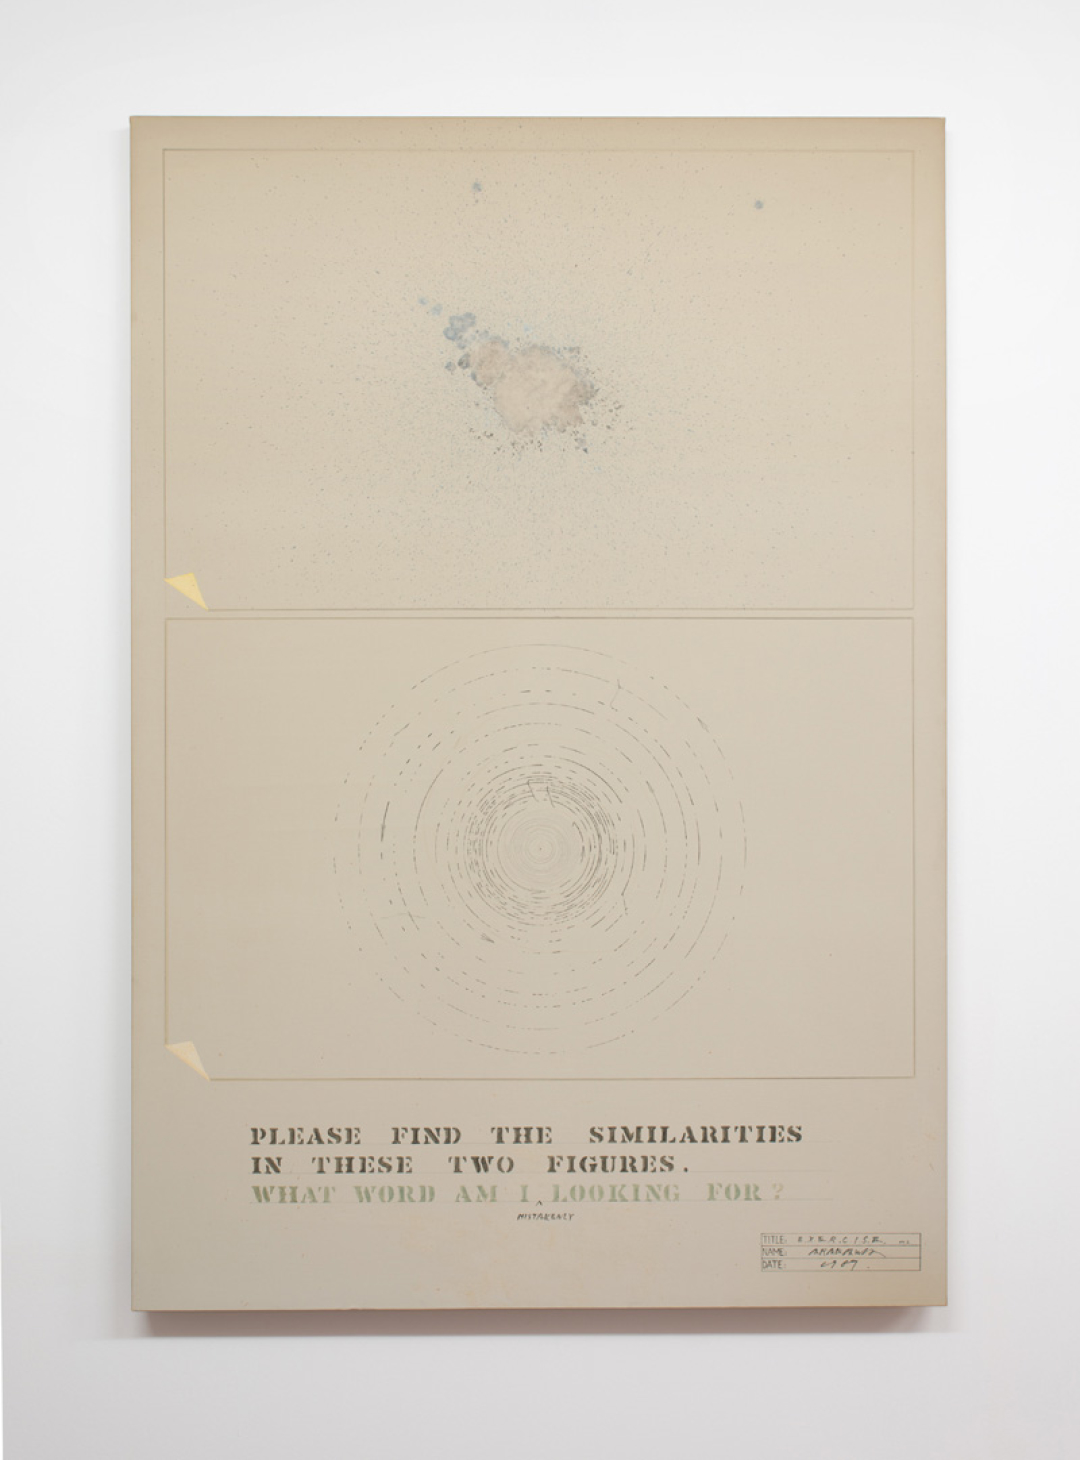 Shusaku Arakawa, E.x.e.r.c.i.s.e. No. 2, 1969, oil and felt tip pen on canvas, 183x124 cm